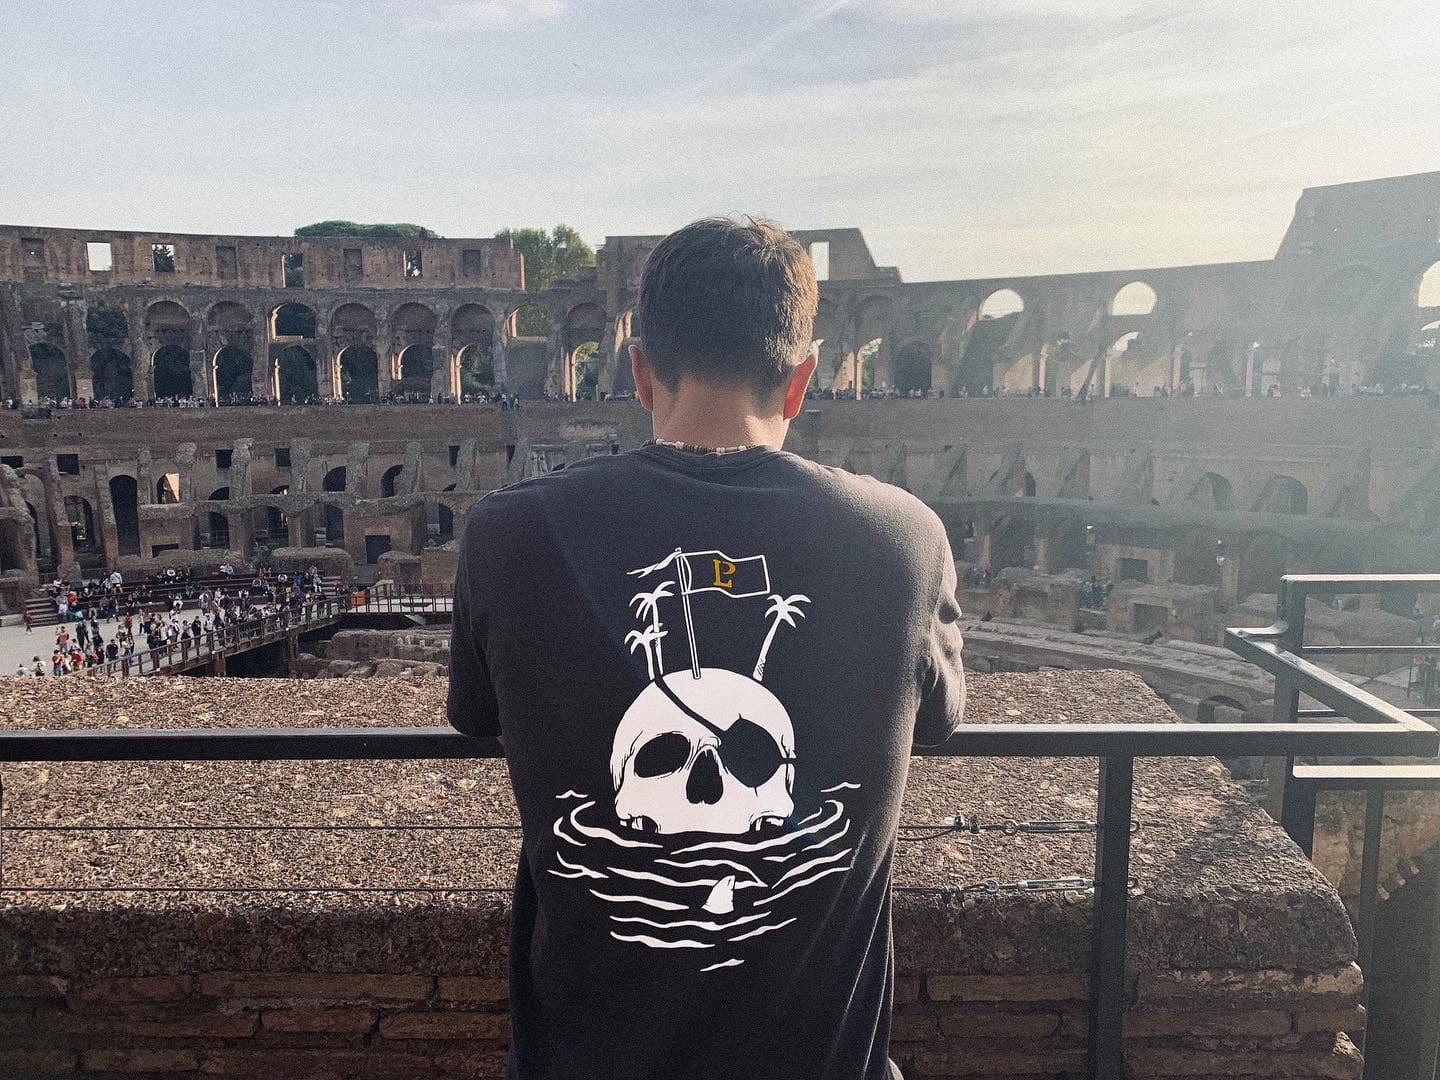 Colosseum, Shirts & Tops